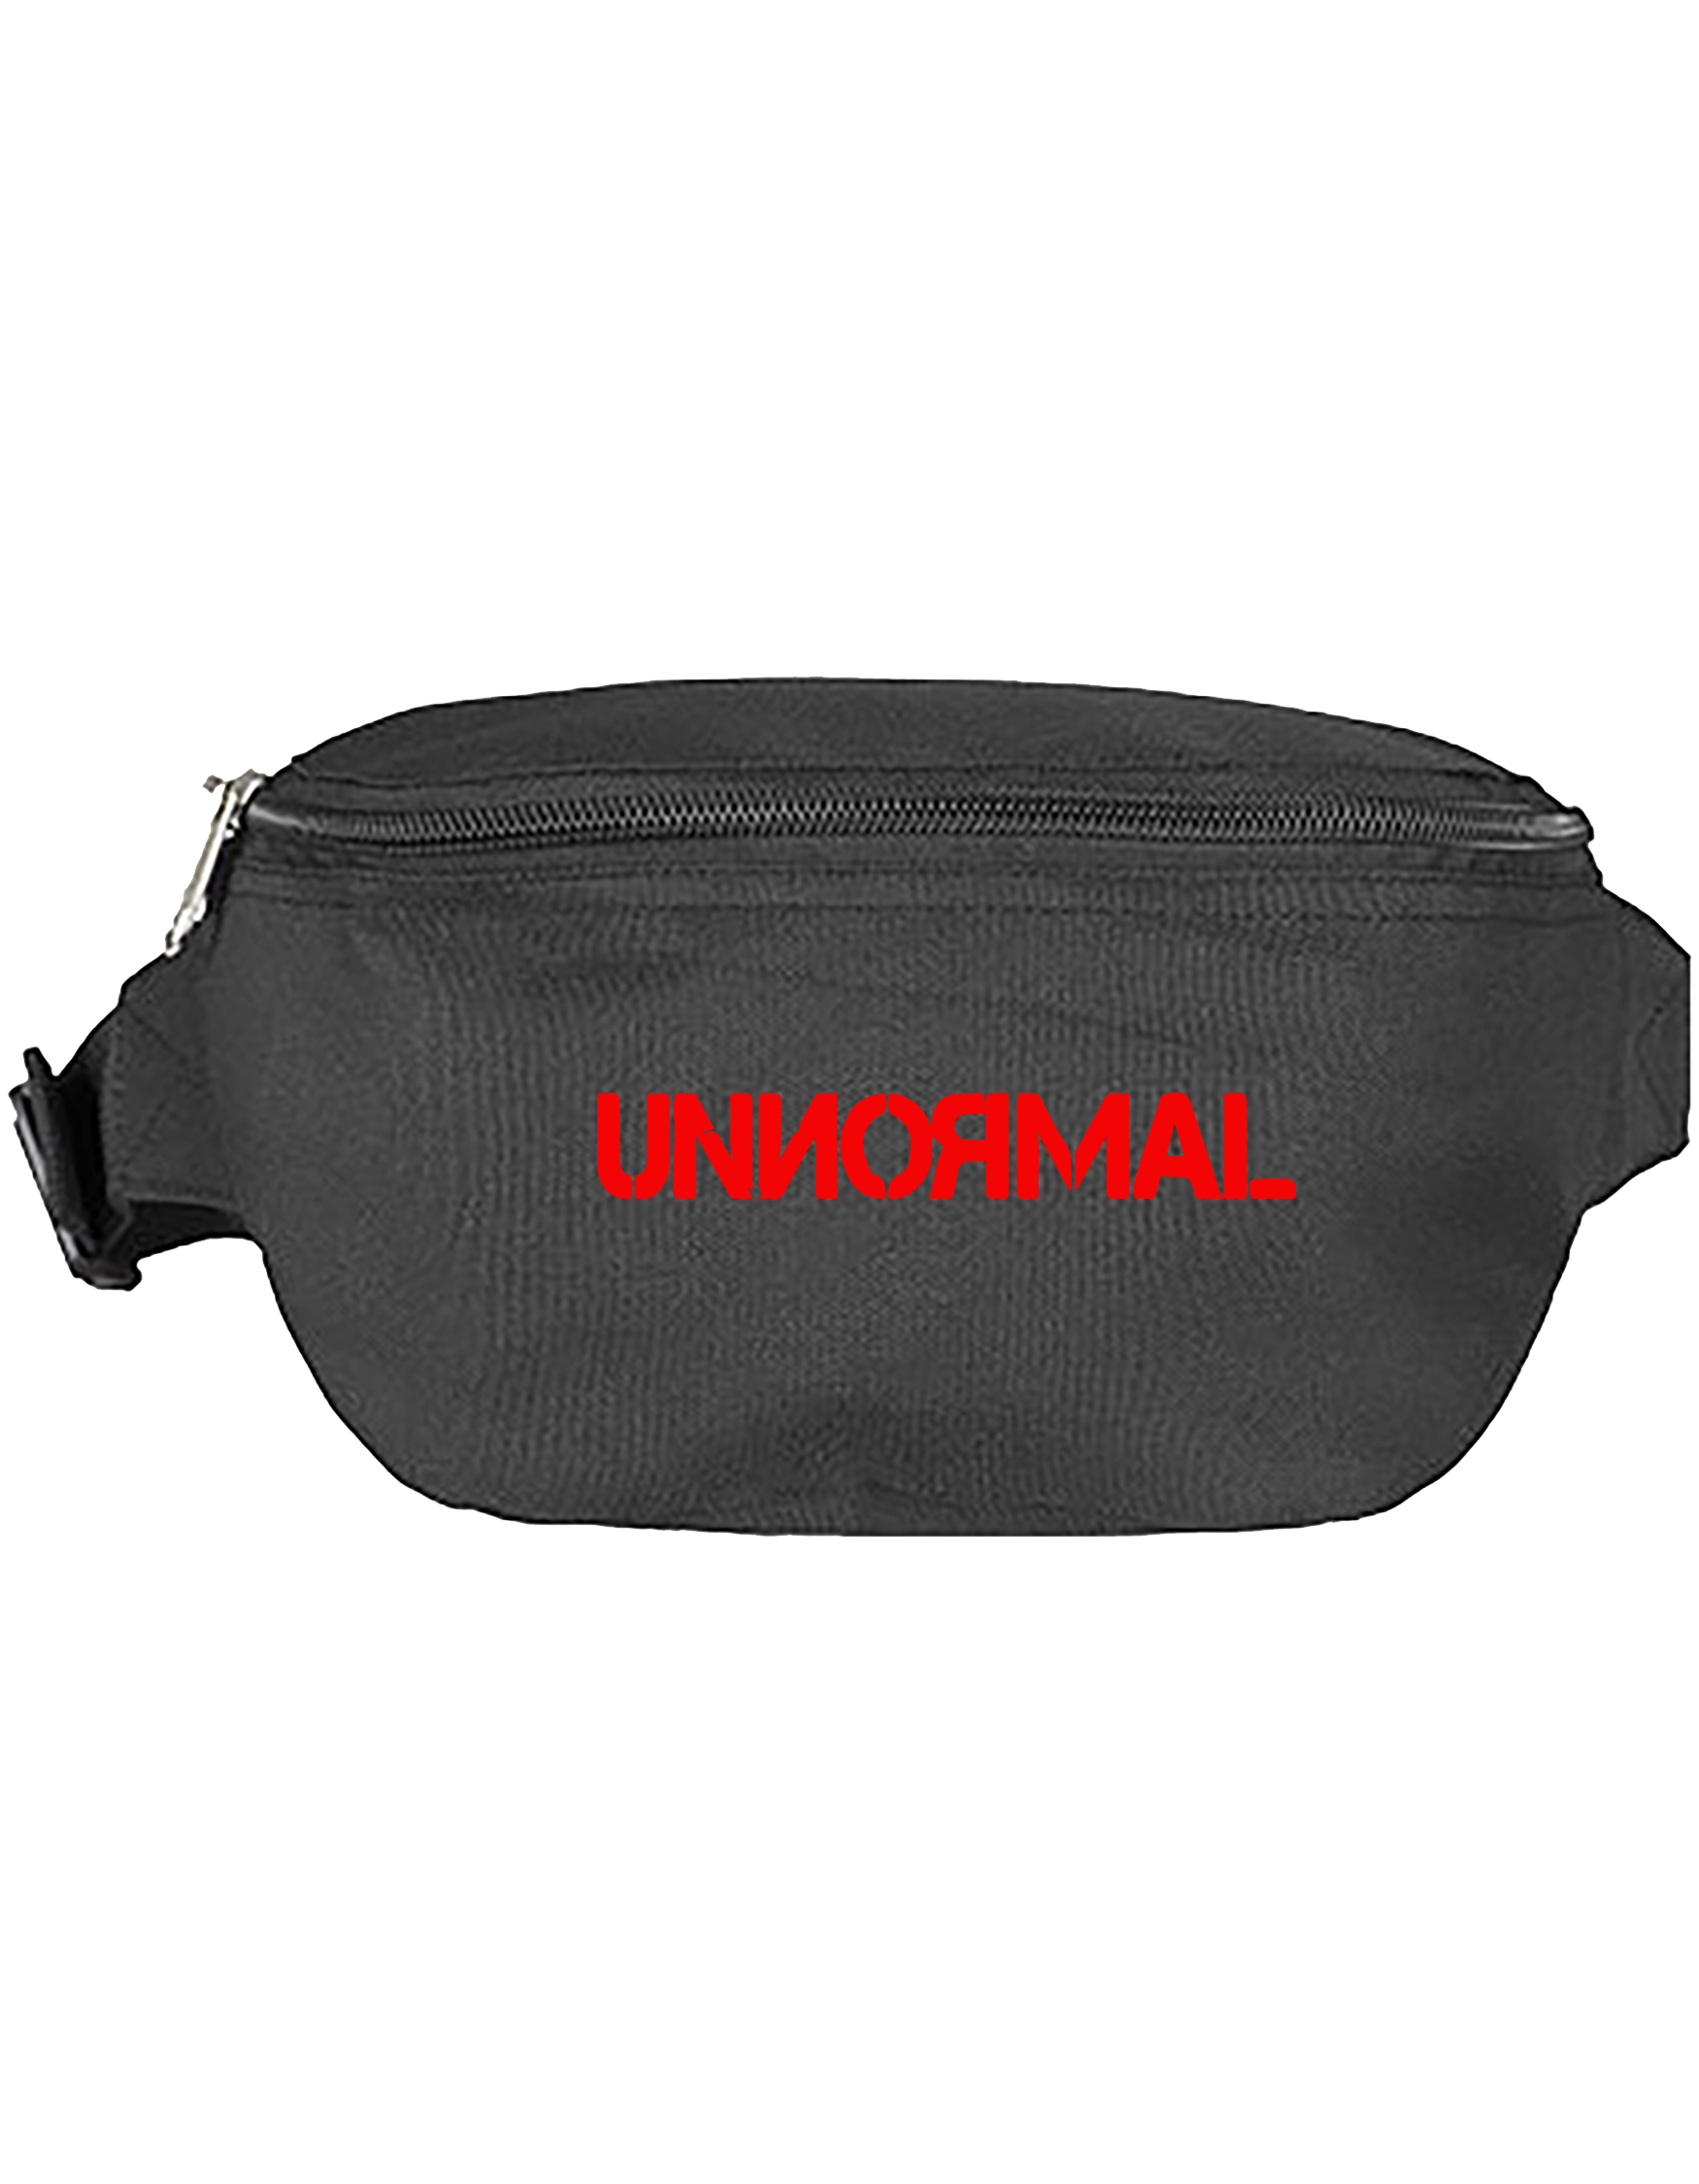 UNNORMAL - Logo - Hip Bag [schwarz]